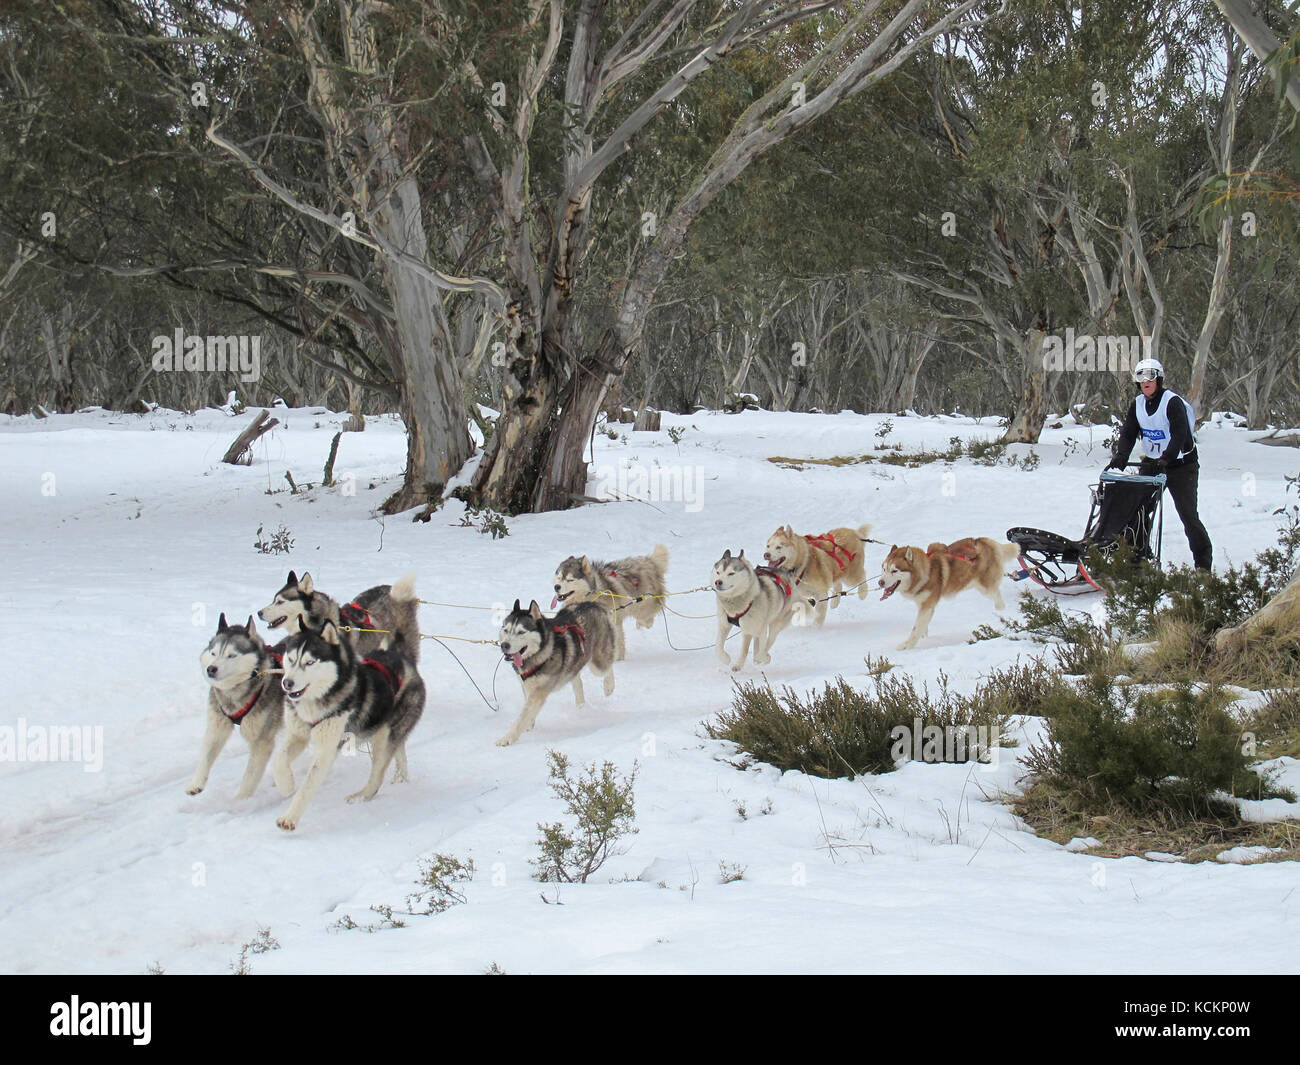 Sled dog racing, at Dinner Plain near Mount Hotham, northeastern Victoria, Australia Stock Photo